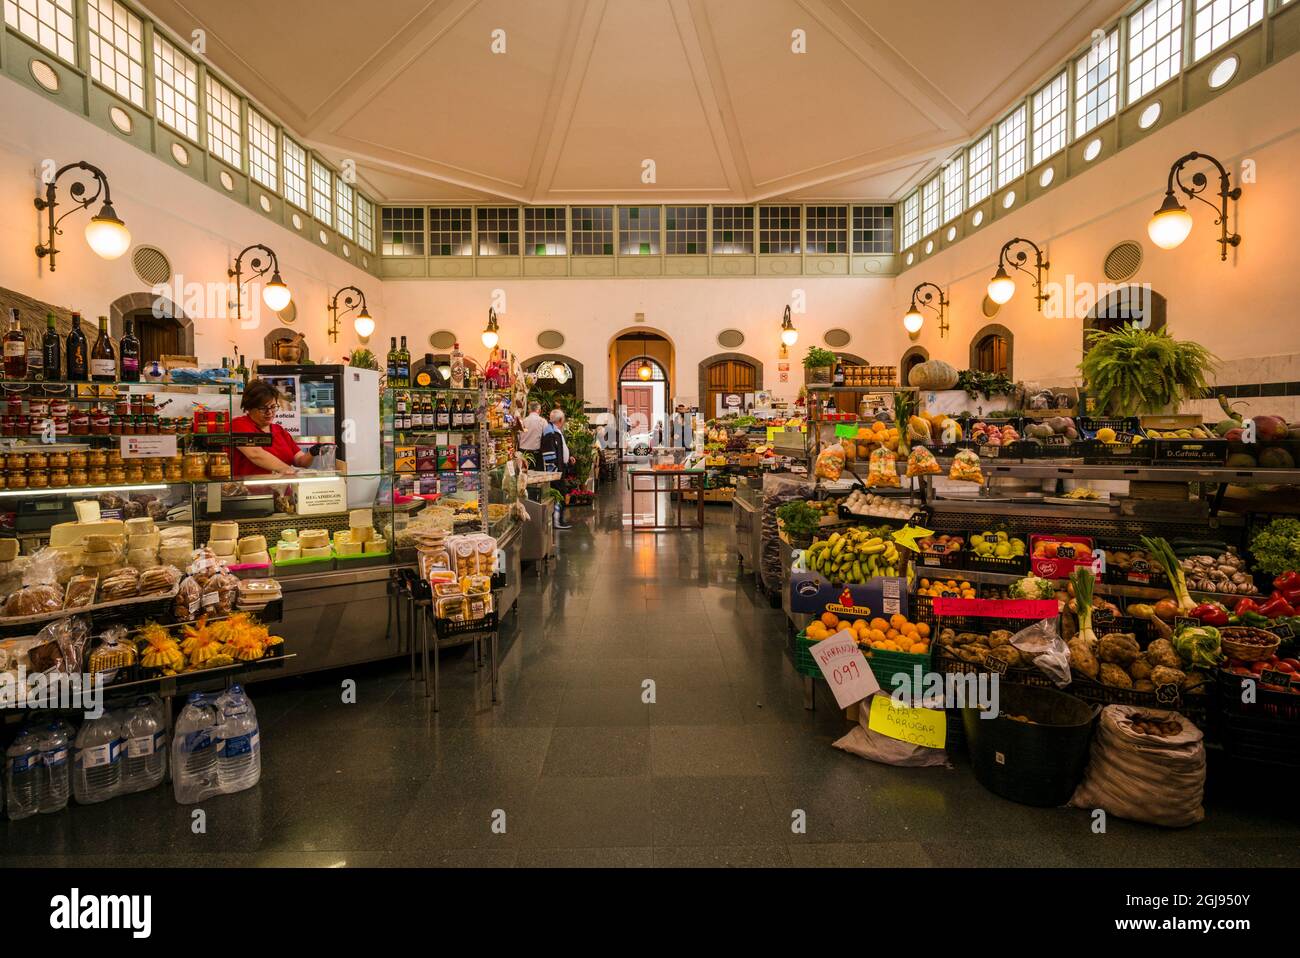 Spain, Canary Islands, La Palma Island, Santa Cruz de la Palma, Mercado La Recova, food market, interior Stock Photo